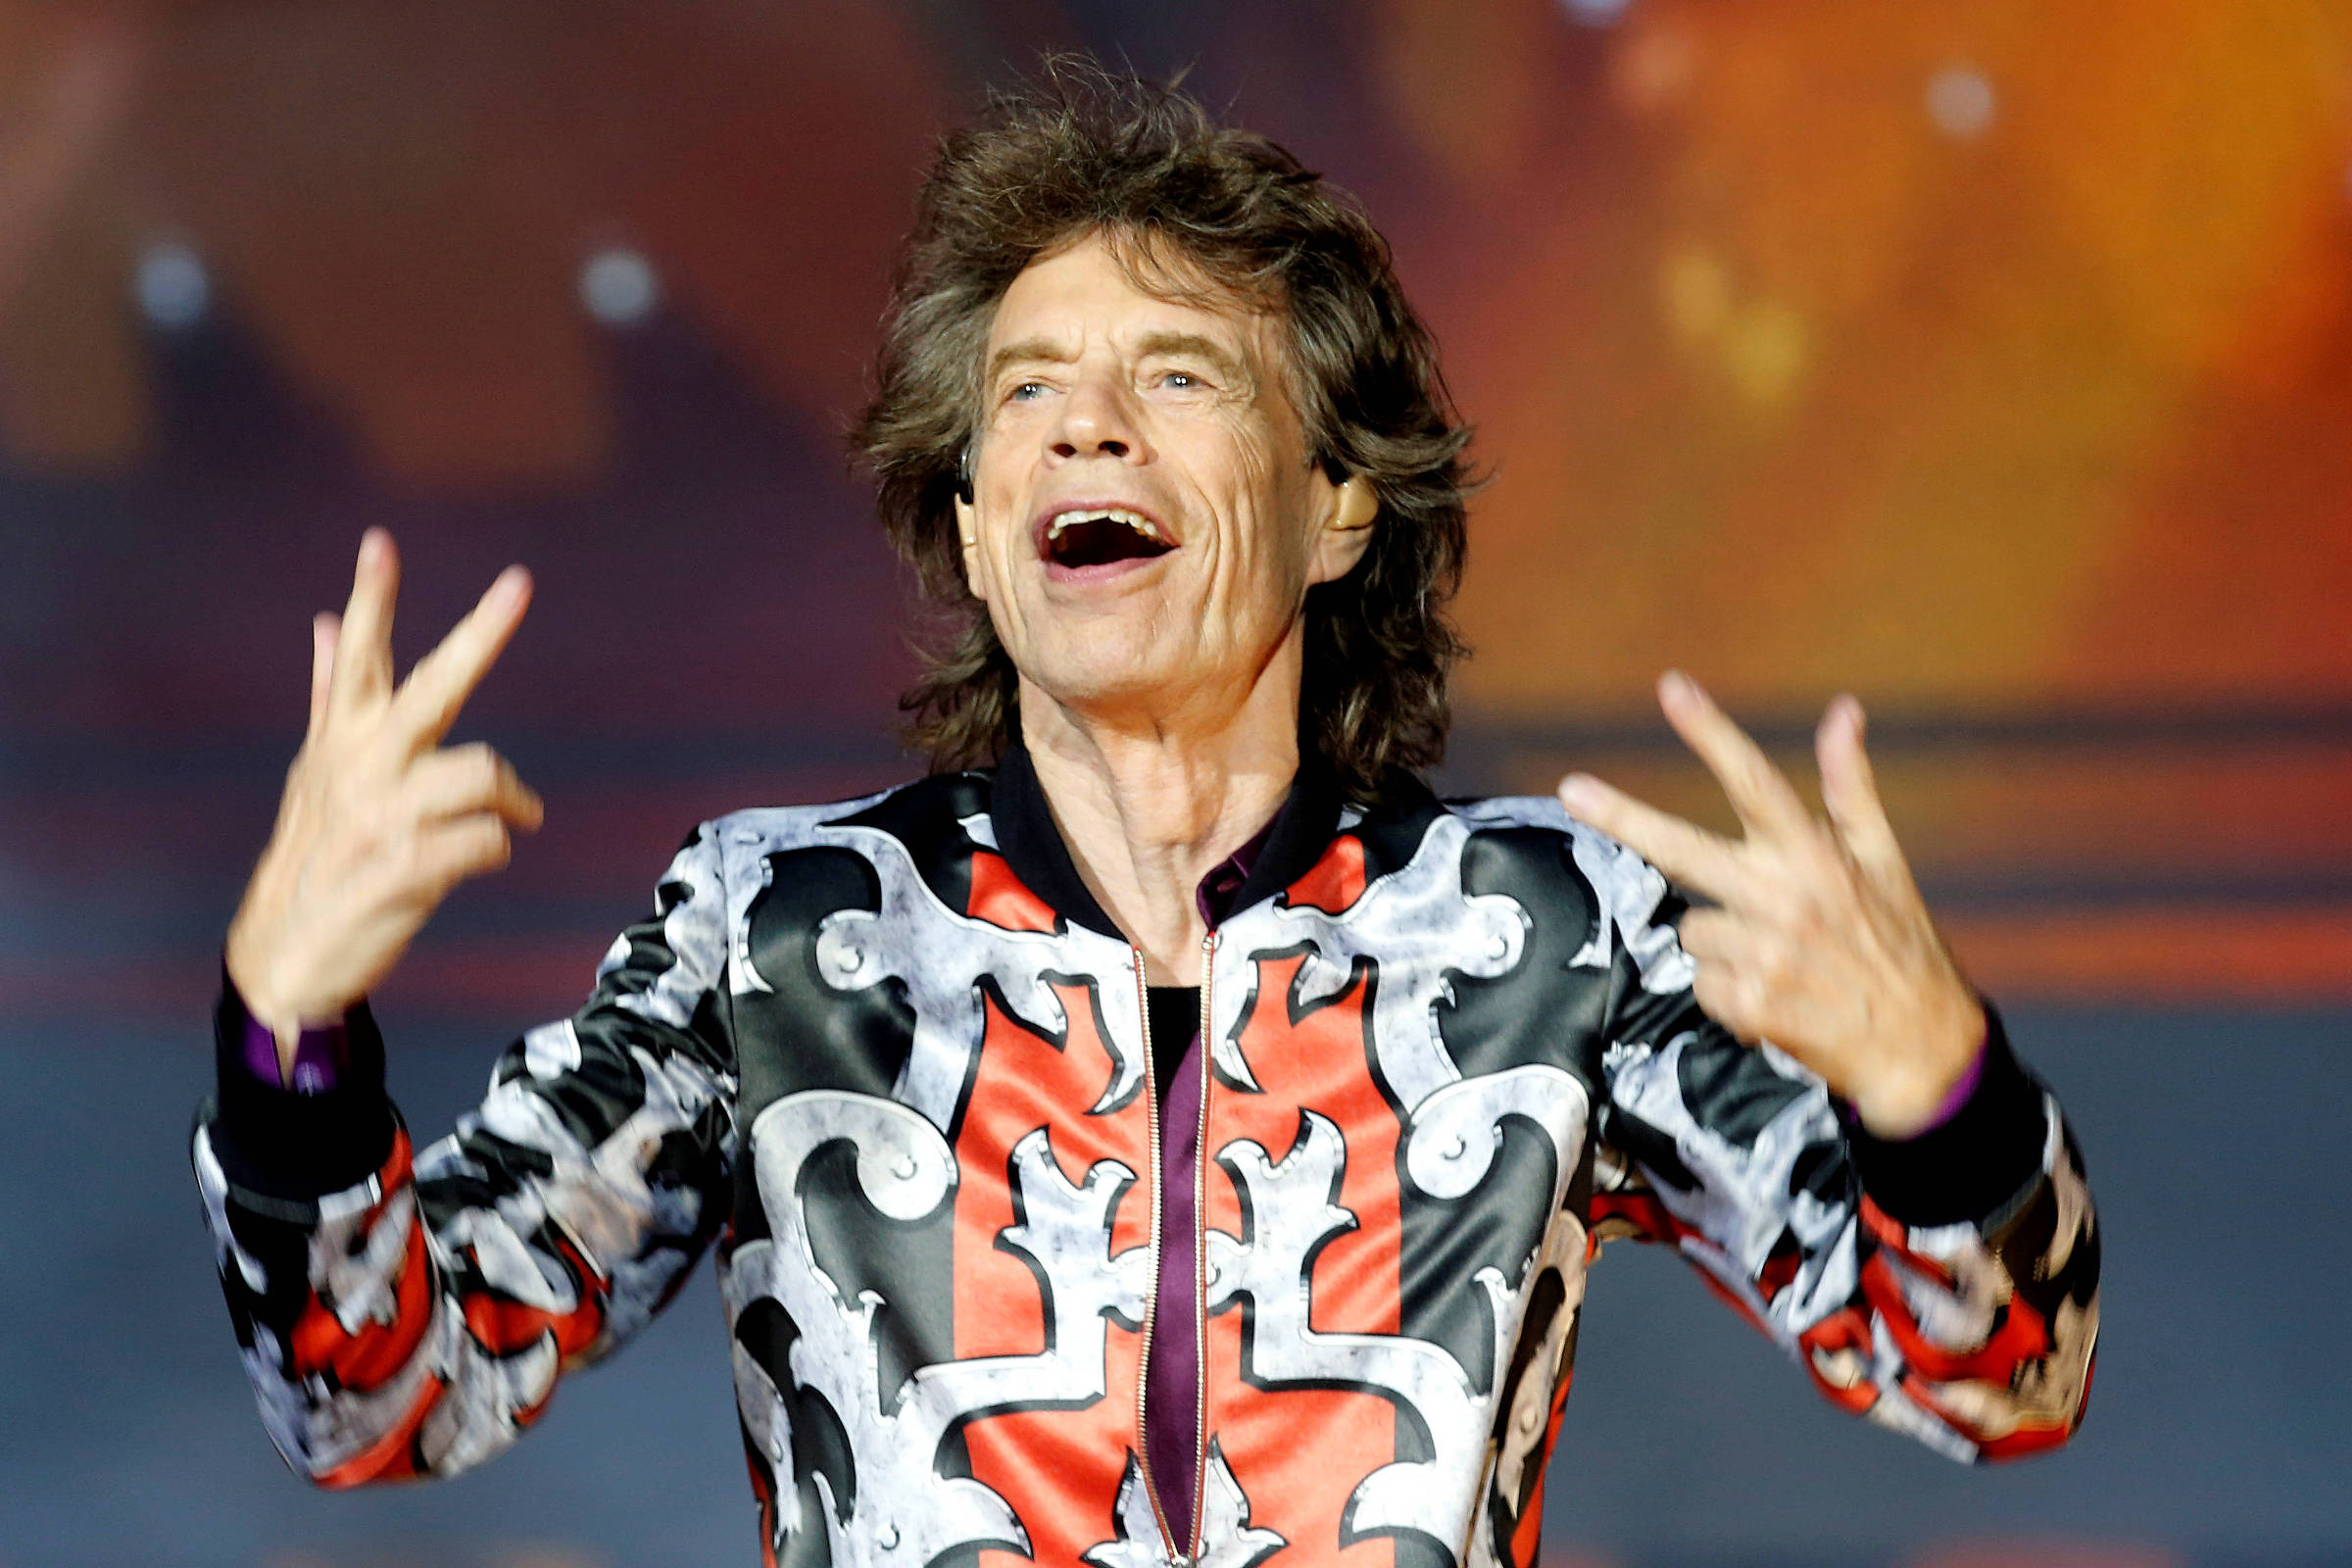 Mick Jagger comemora fim do lockdown em nova música, 'Eazy Sleazy' 13